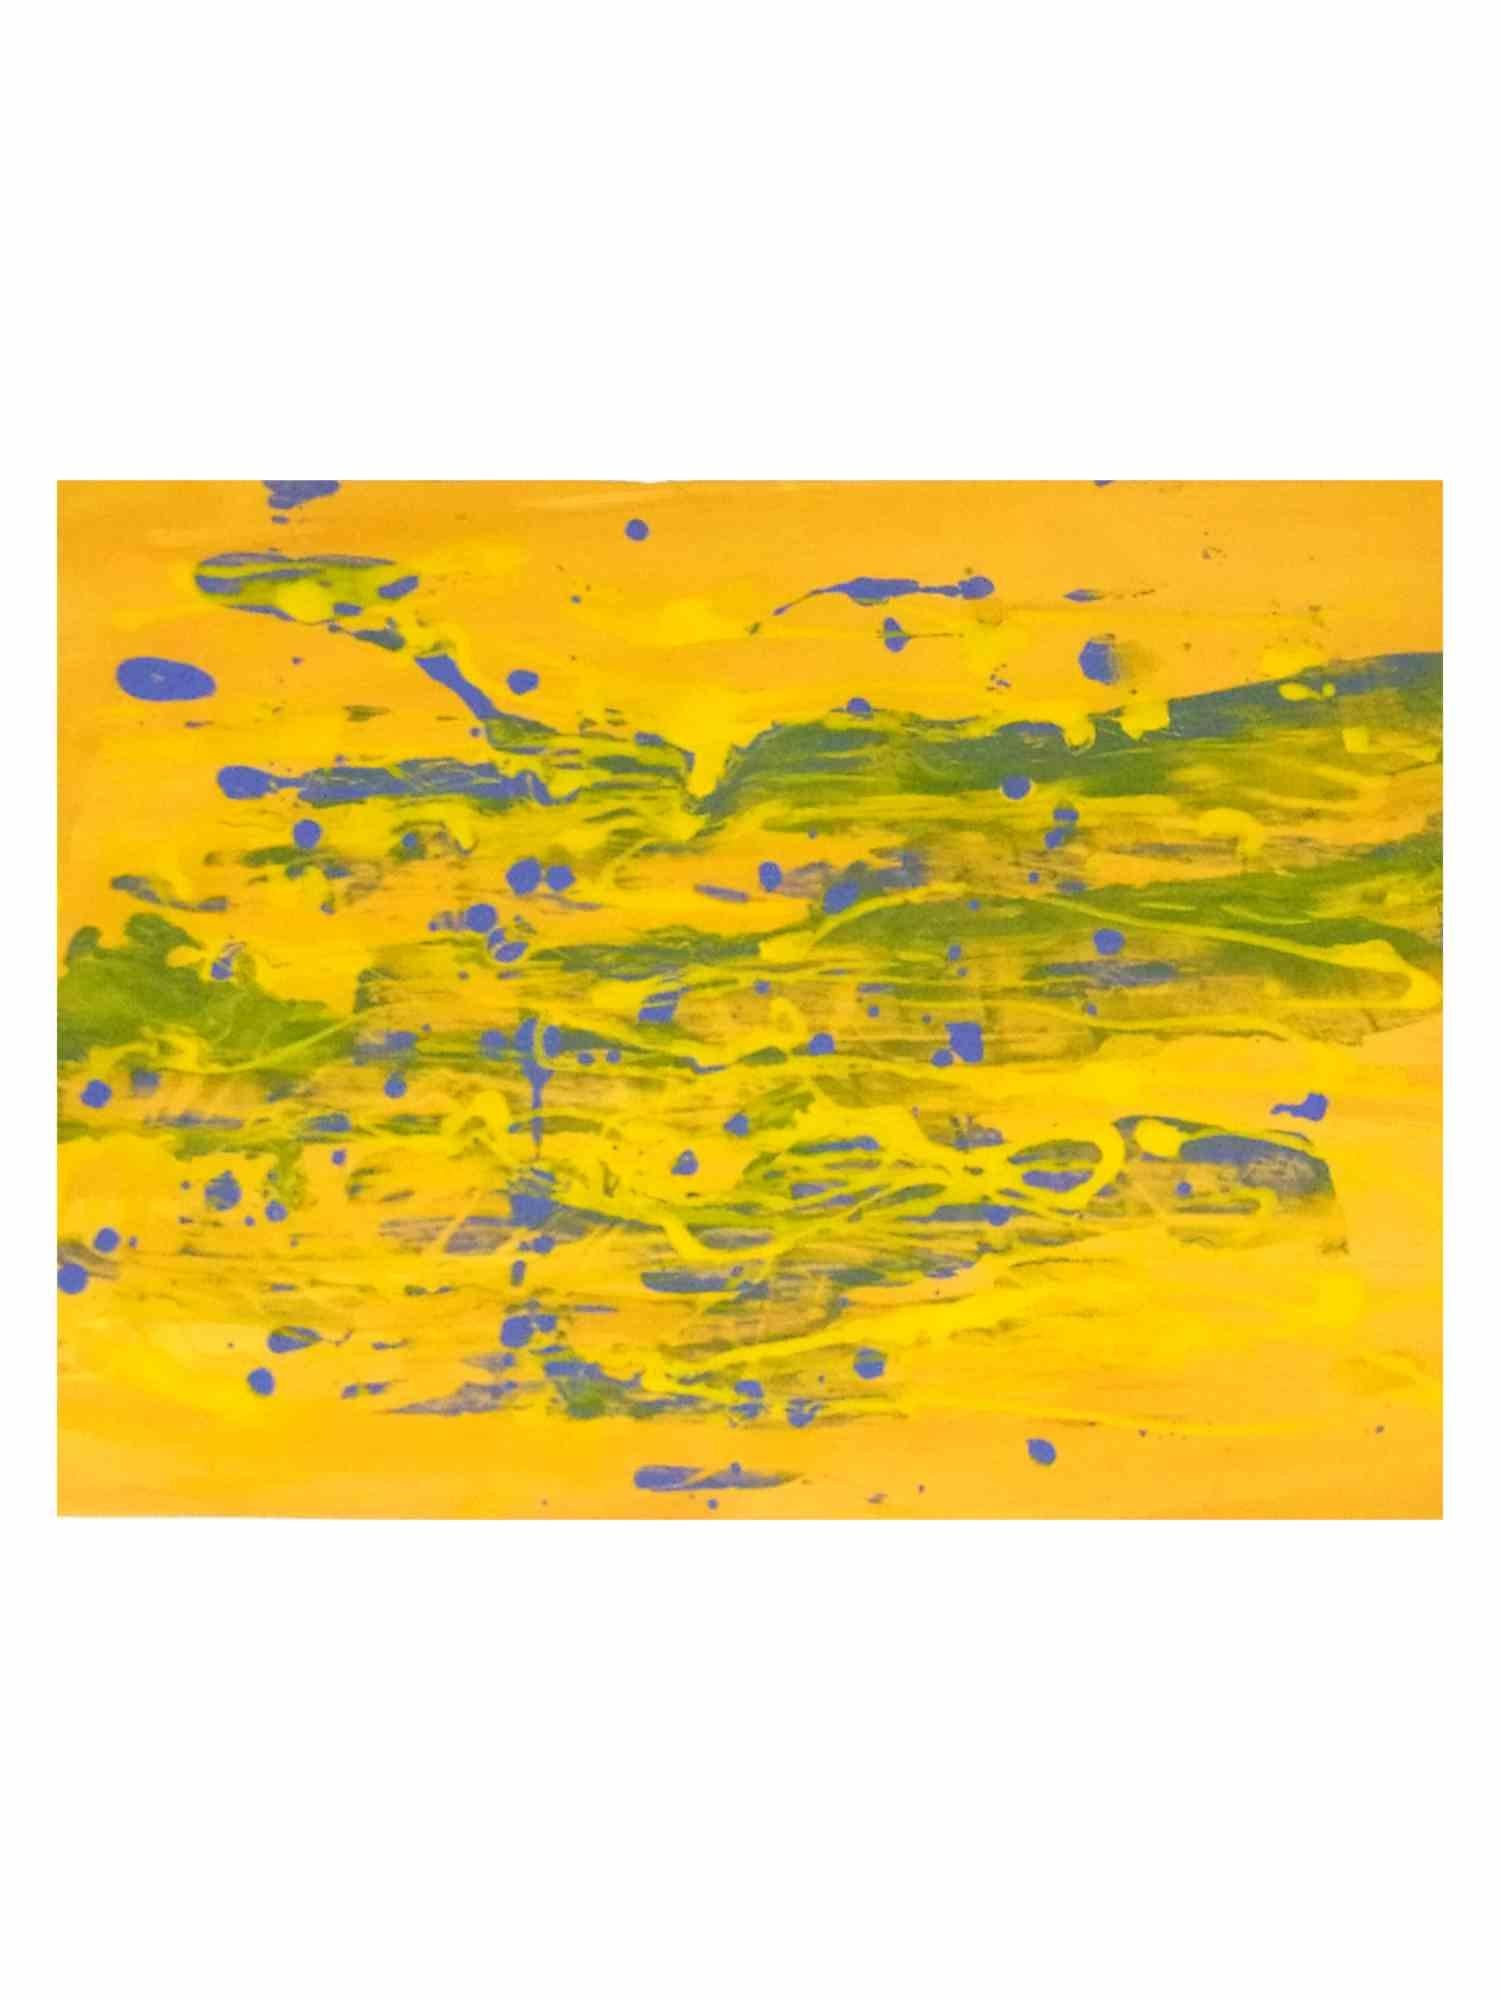 Abstract Painting Contempologyc E.M. - Surreale - Tempera sur papier - 2018